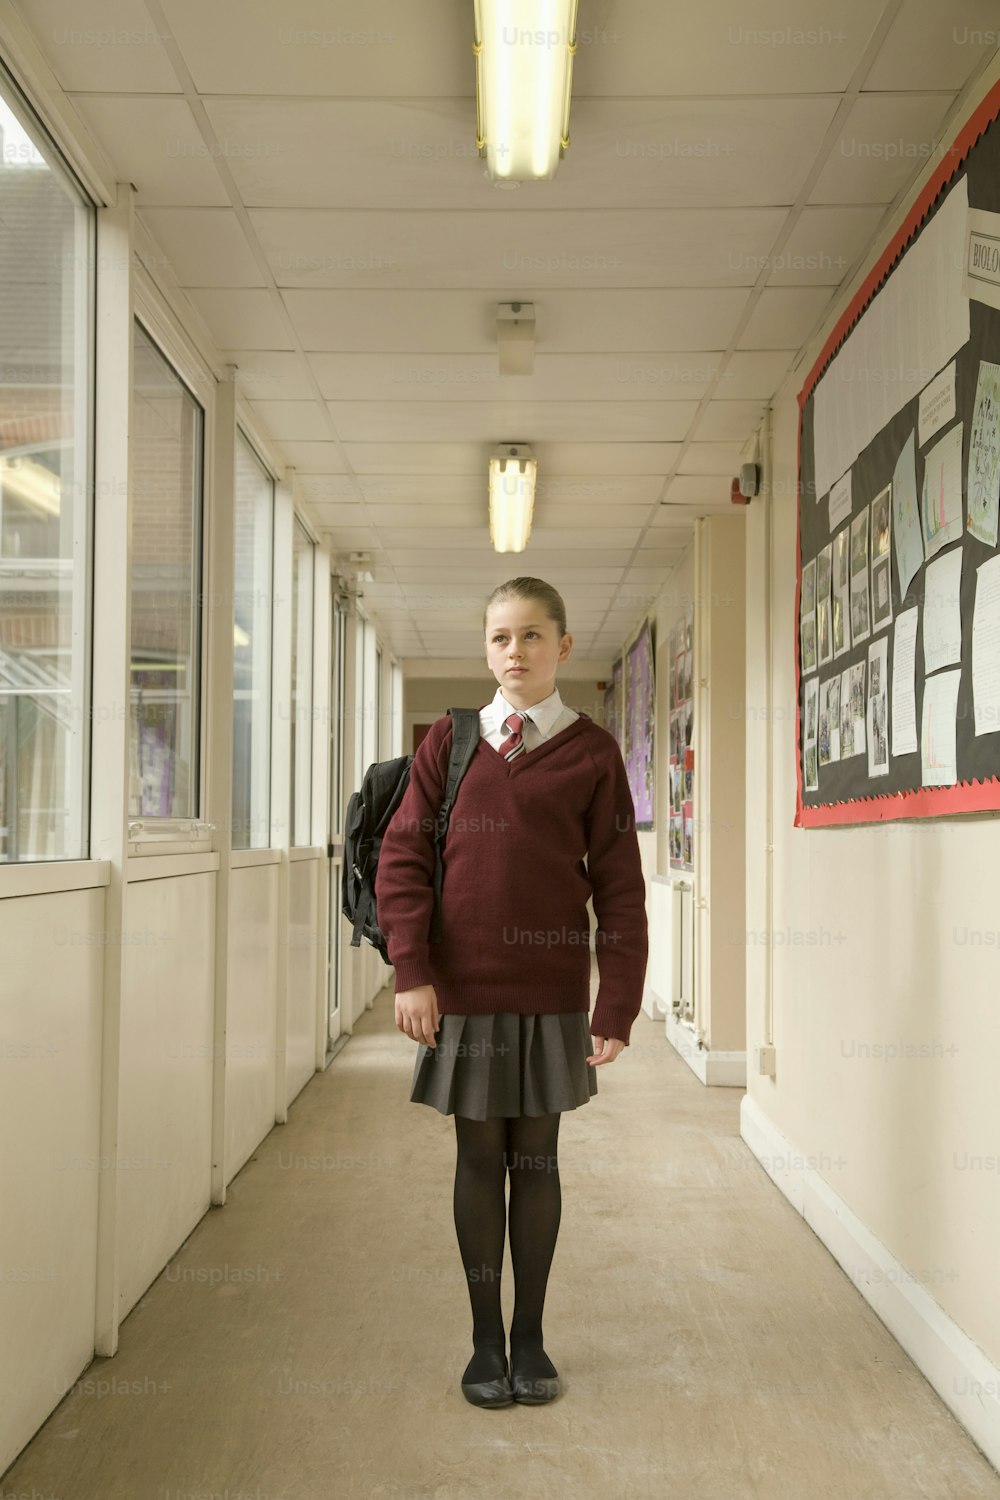 a girl in a school uniform standing in a hallway